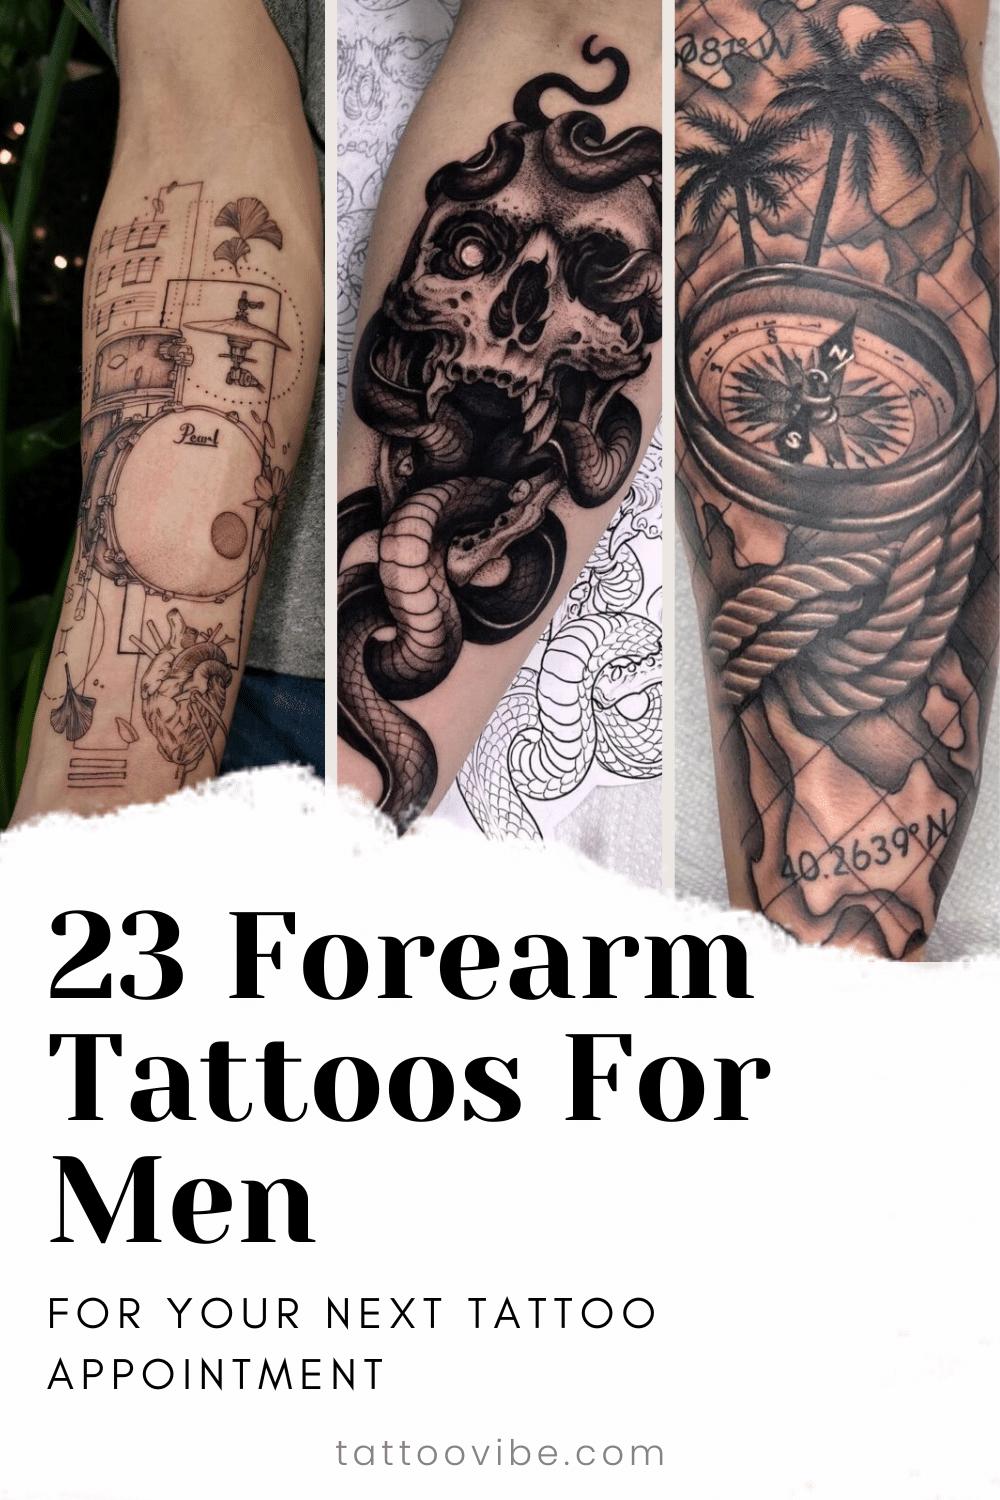 23 tatuajes para hombres en el antebrazo para tu próxima cita con el tatuaje